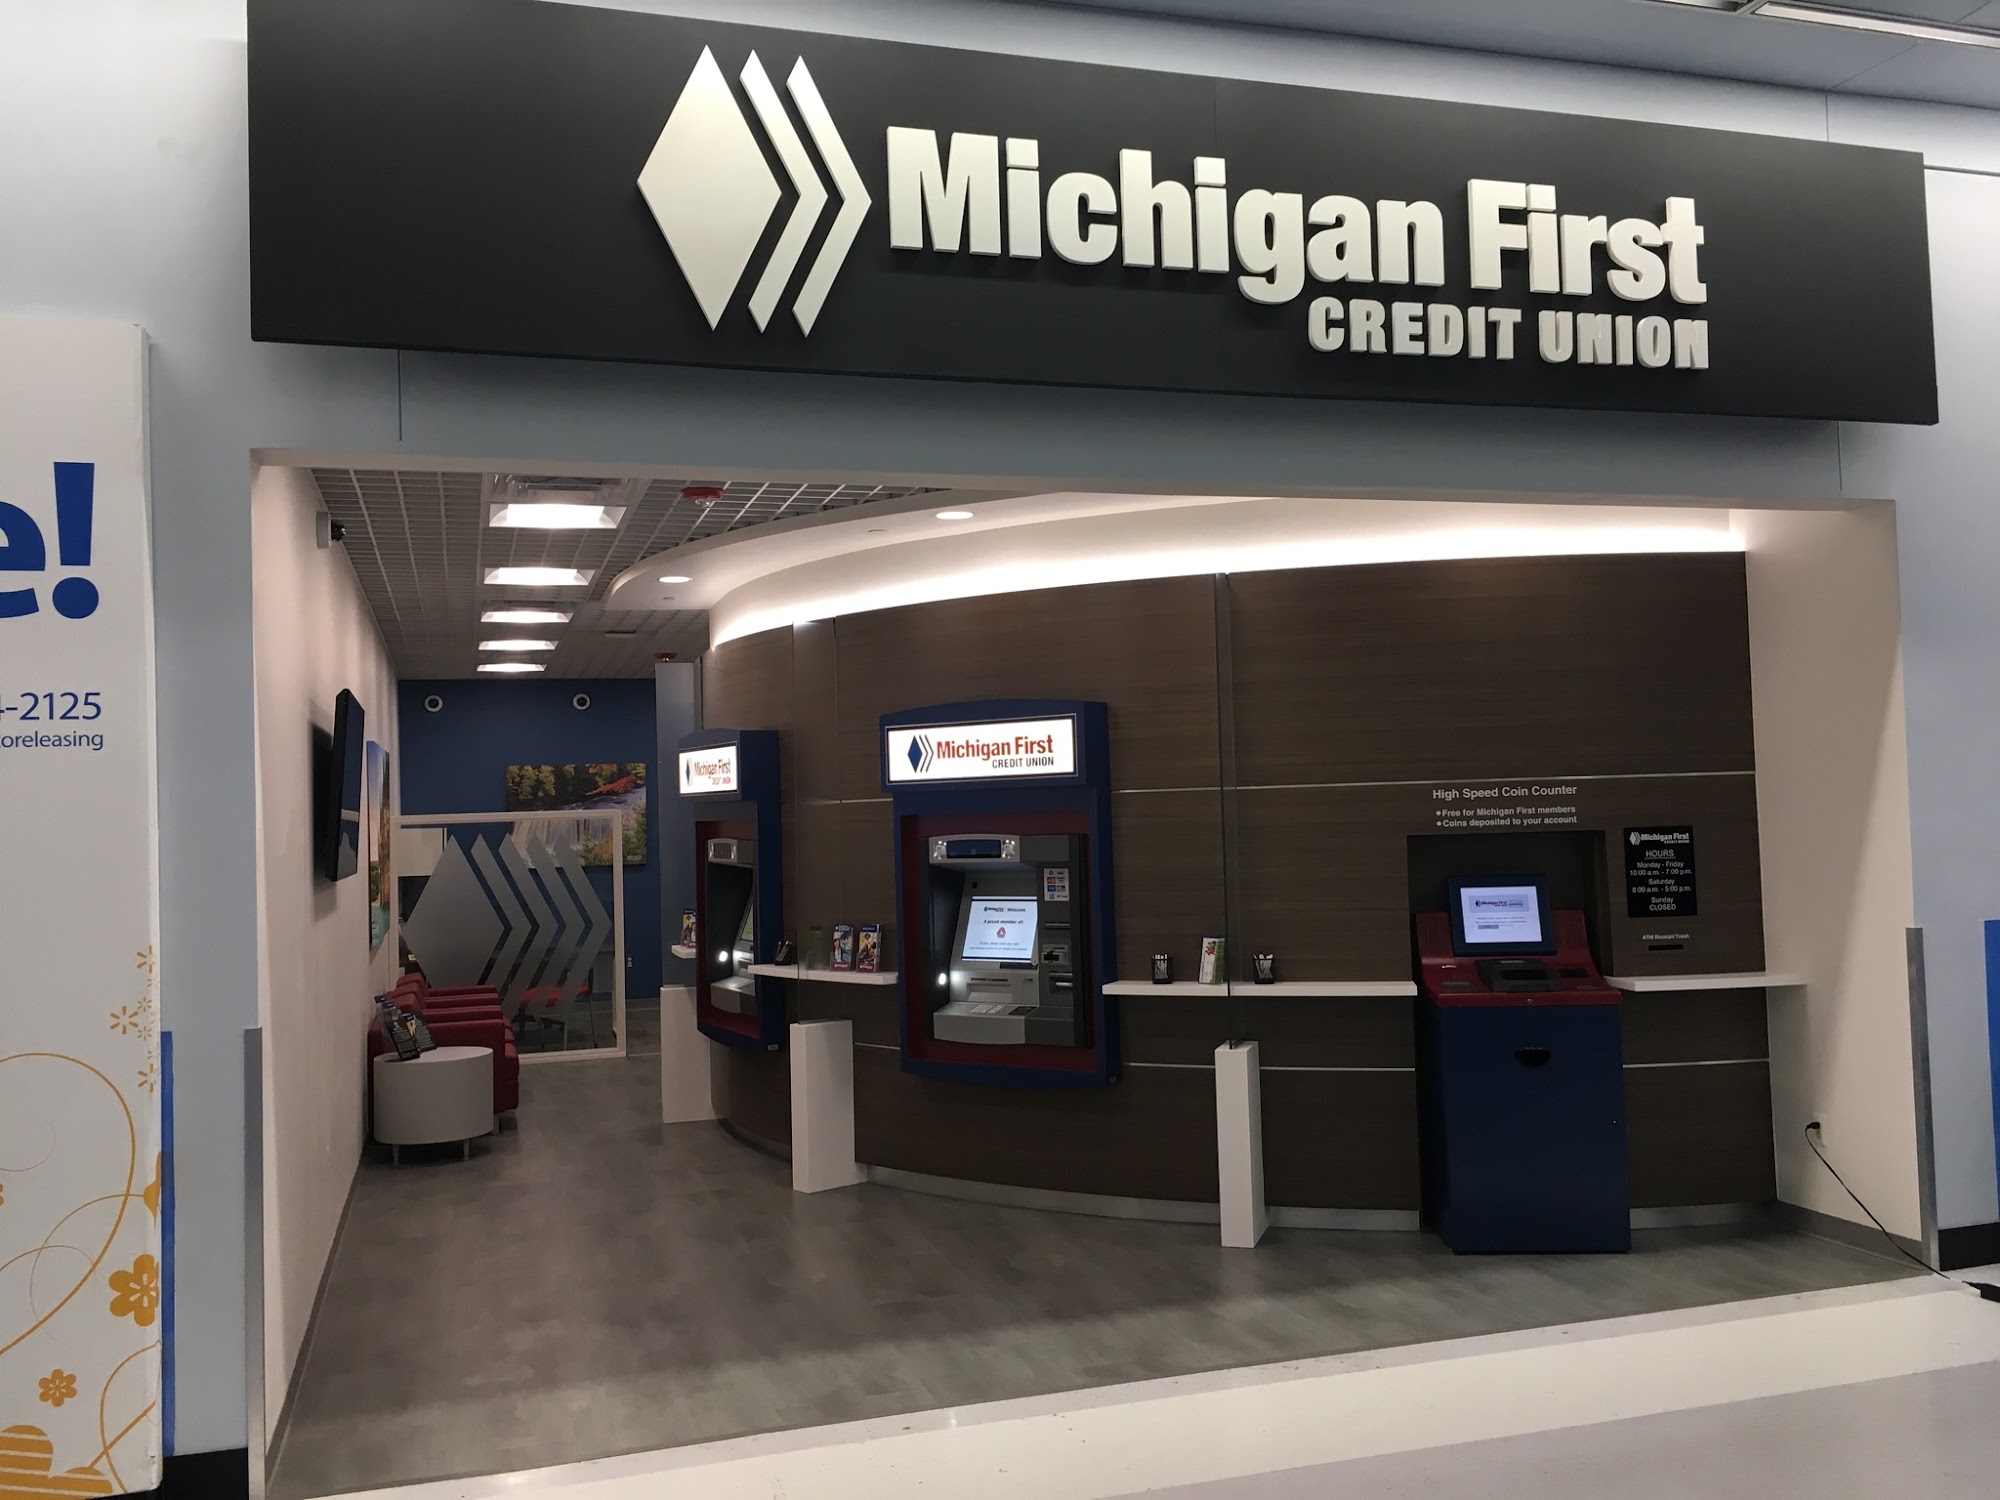 Michigan First Credit Union (Inside Walmart)